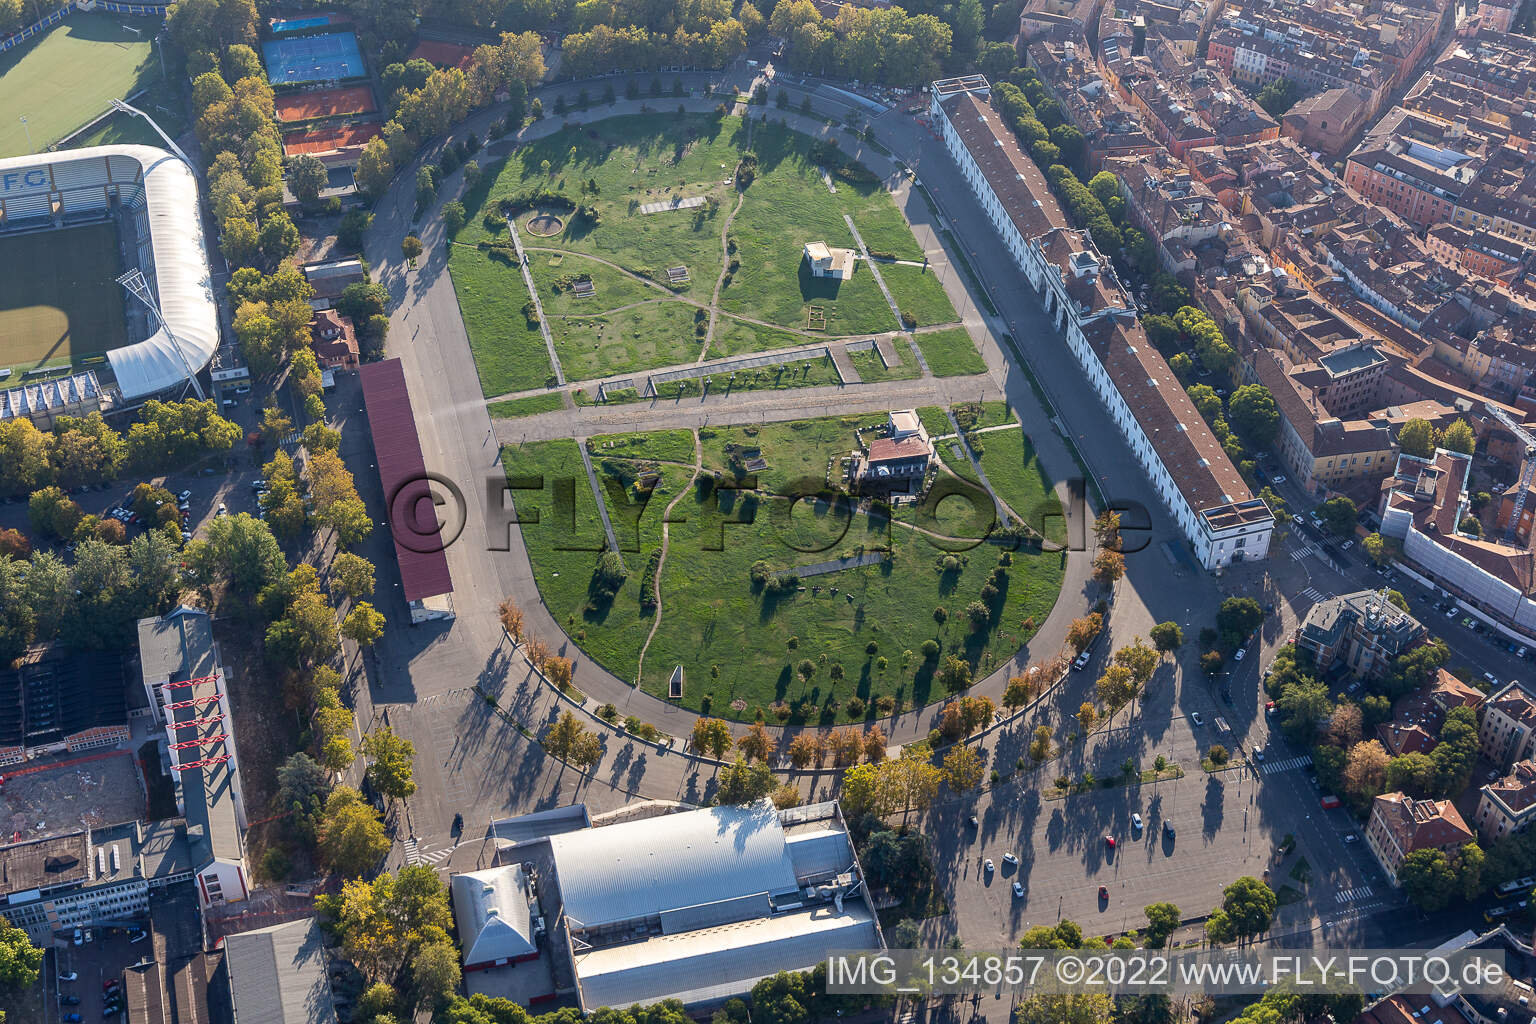 Luftbild von Parco archeologico Novi Ark in Modena, Italien